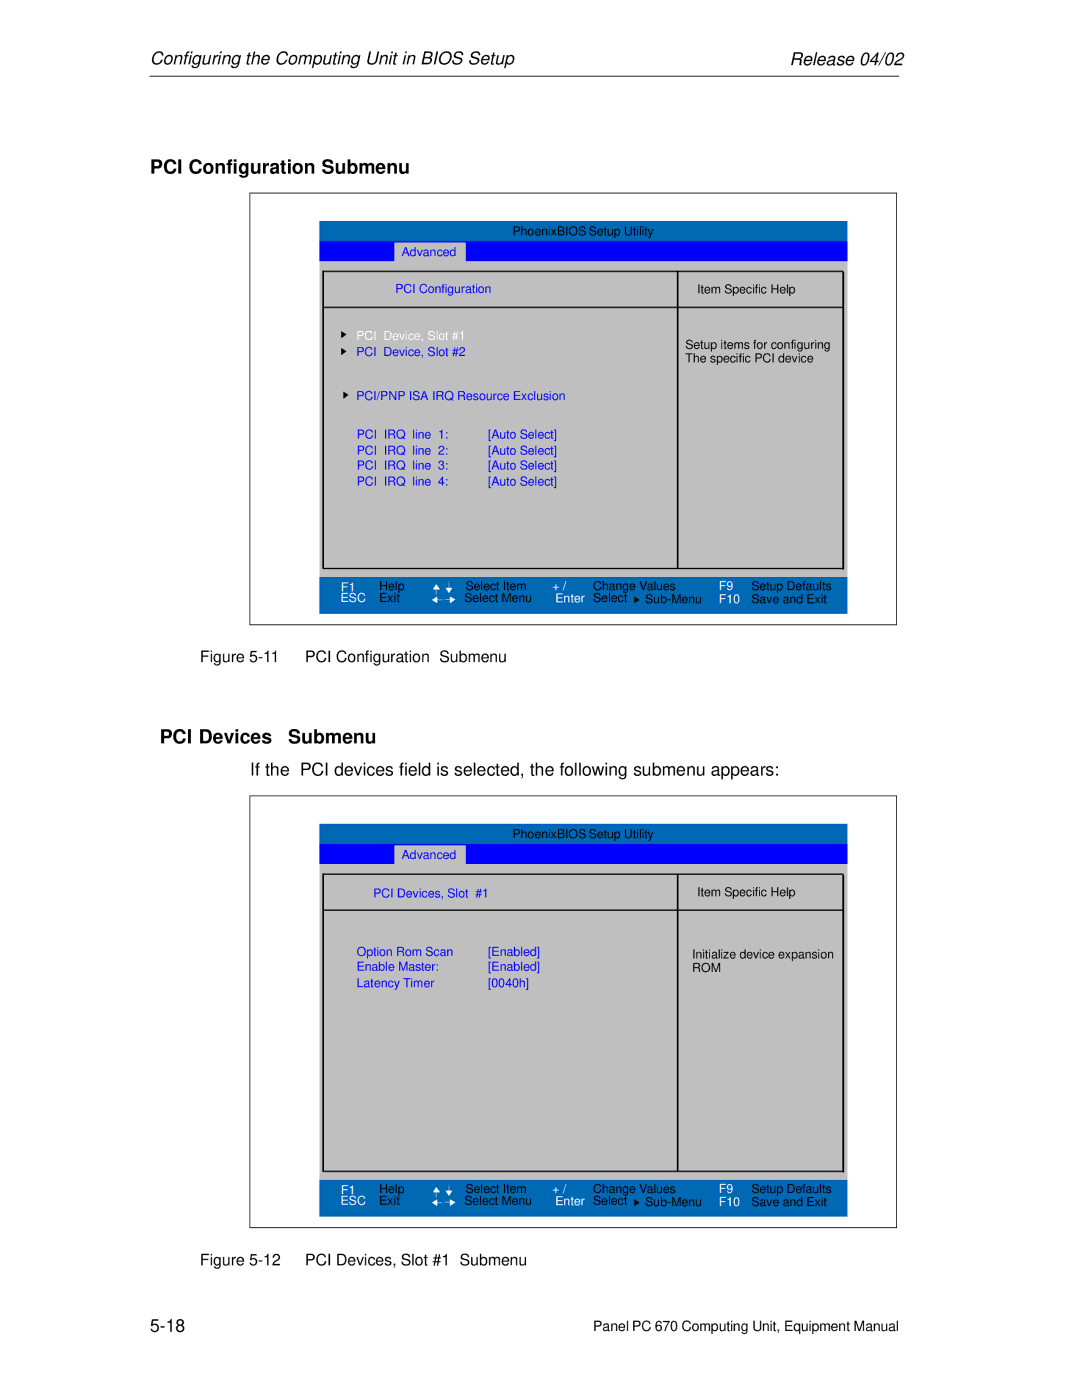 Siemens PC 670 manual PCI Configuration Submenu, PCI Devices Submenu 